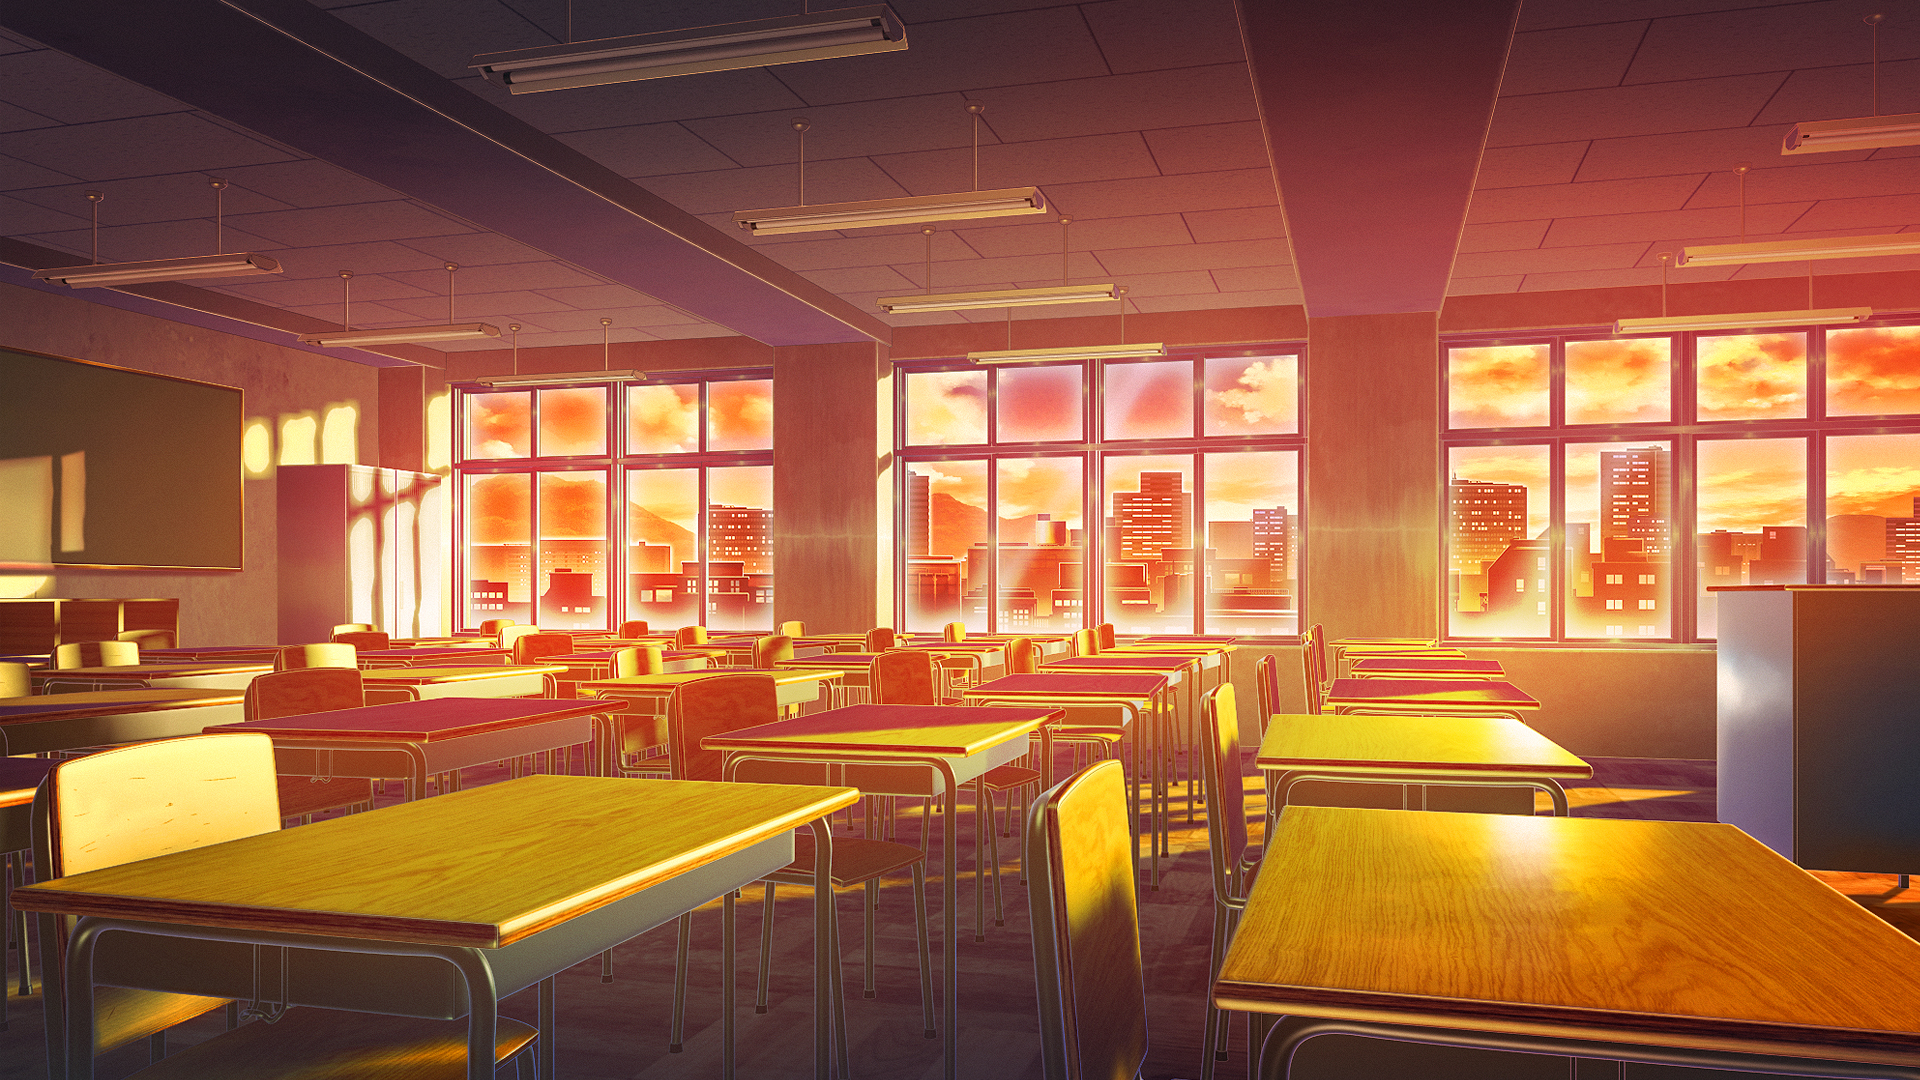 Classroom Sunset 1920x1080